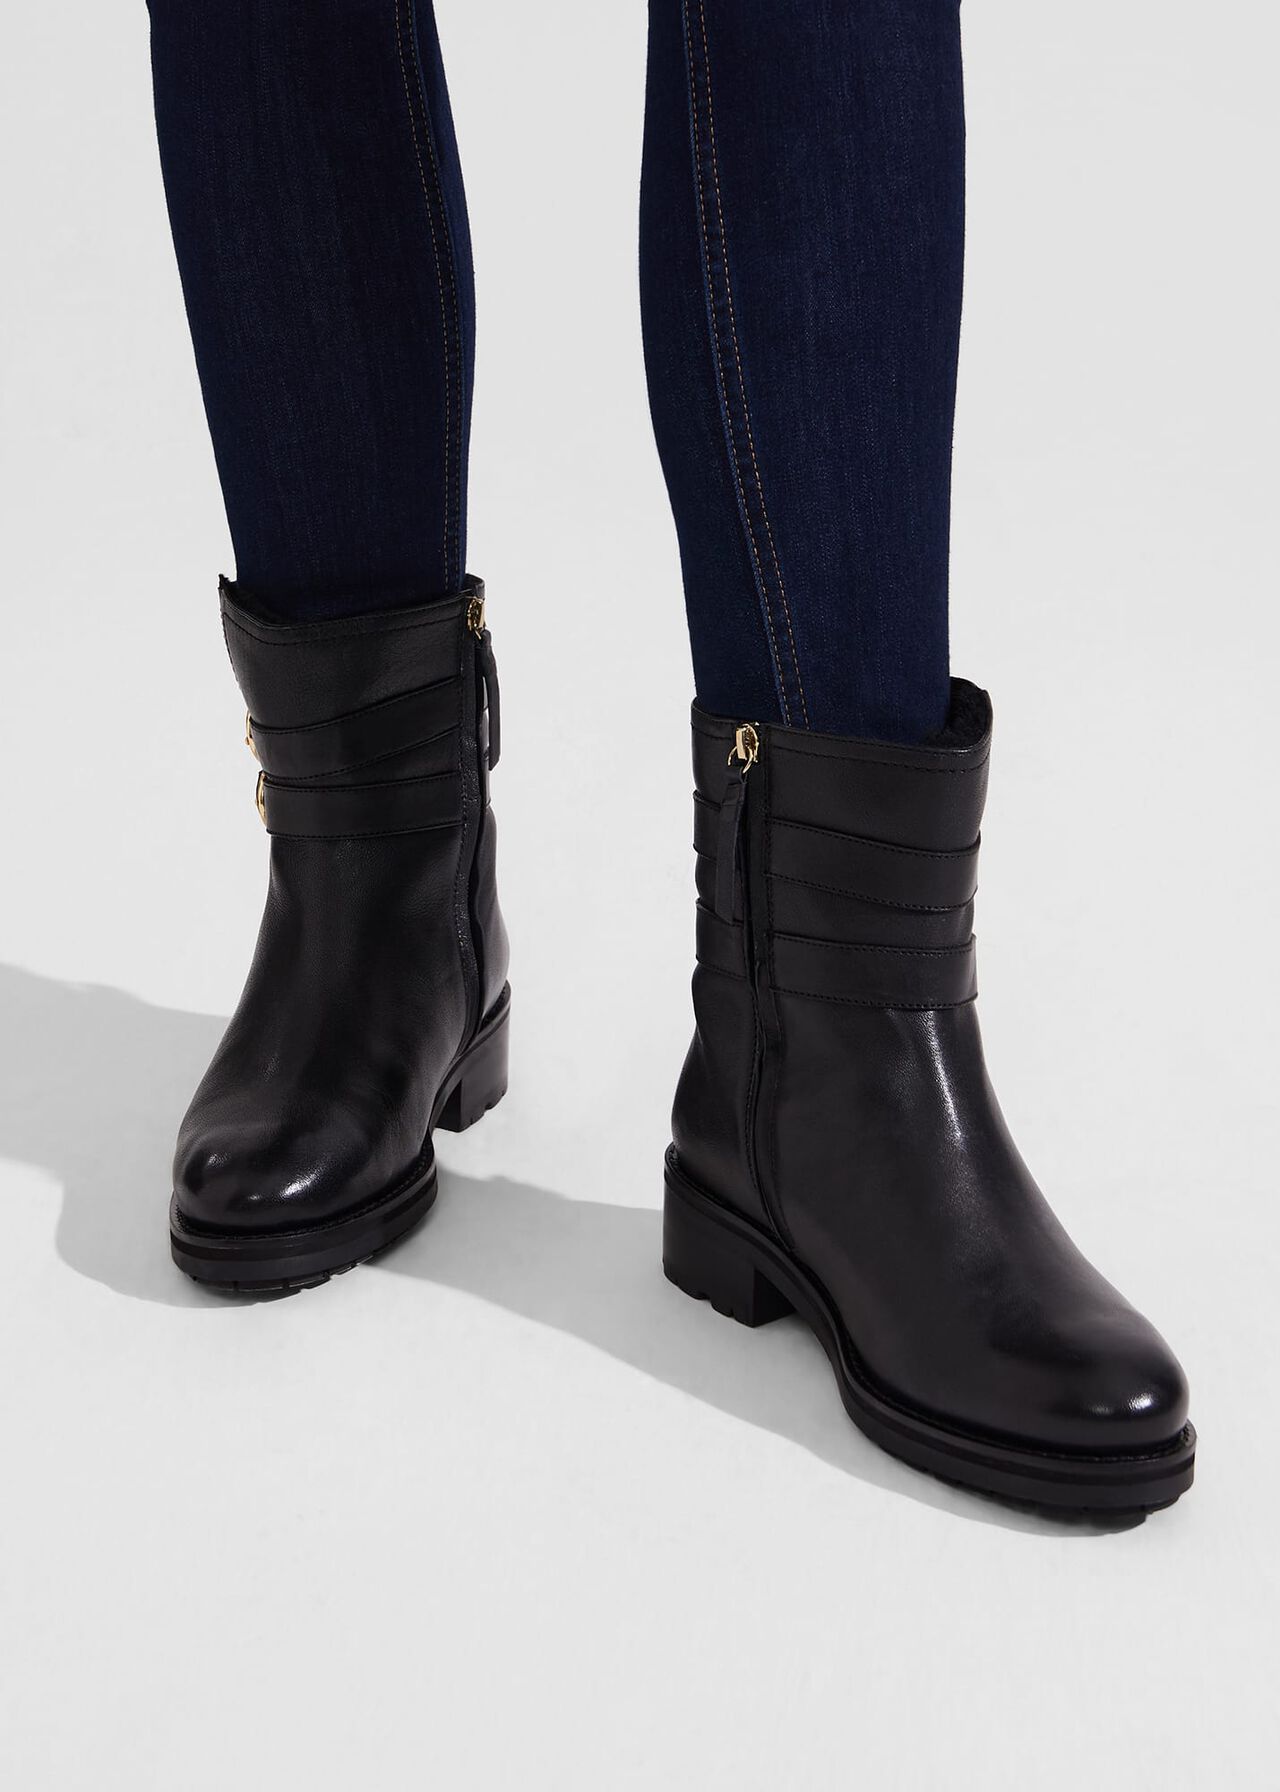 Matilda Ankle Boots, Black, hi-res